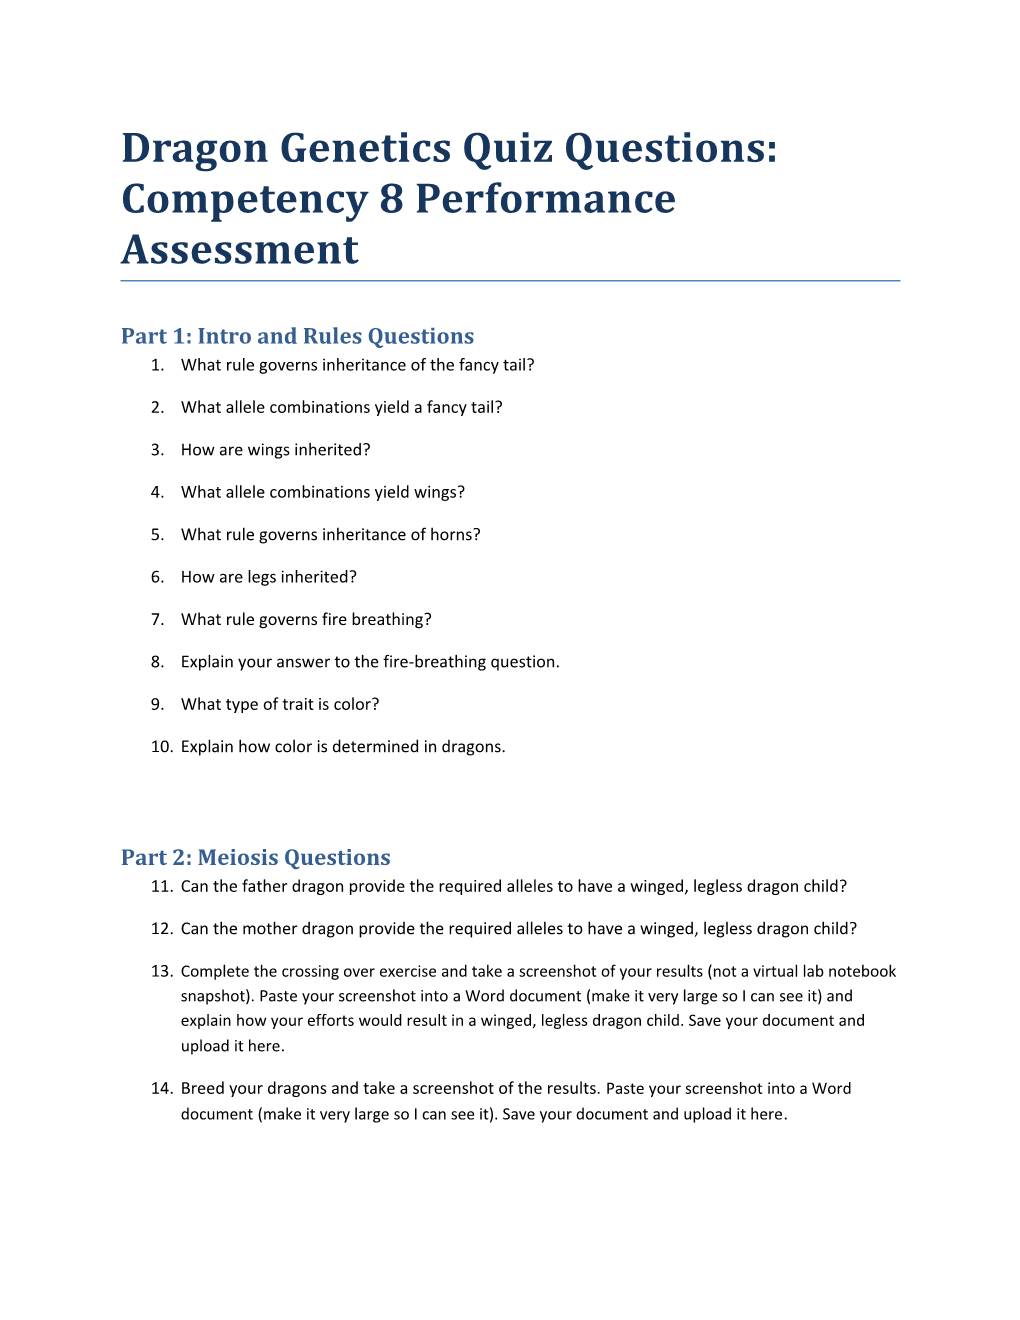 Dragon Genetics Quiz Questions: Competency 8 Performance Assessment